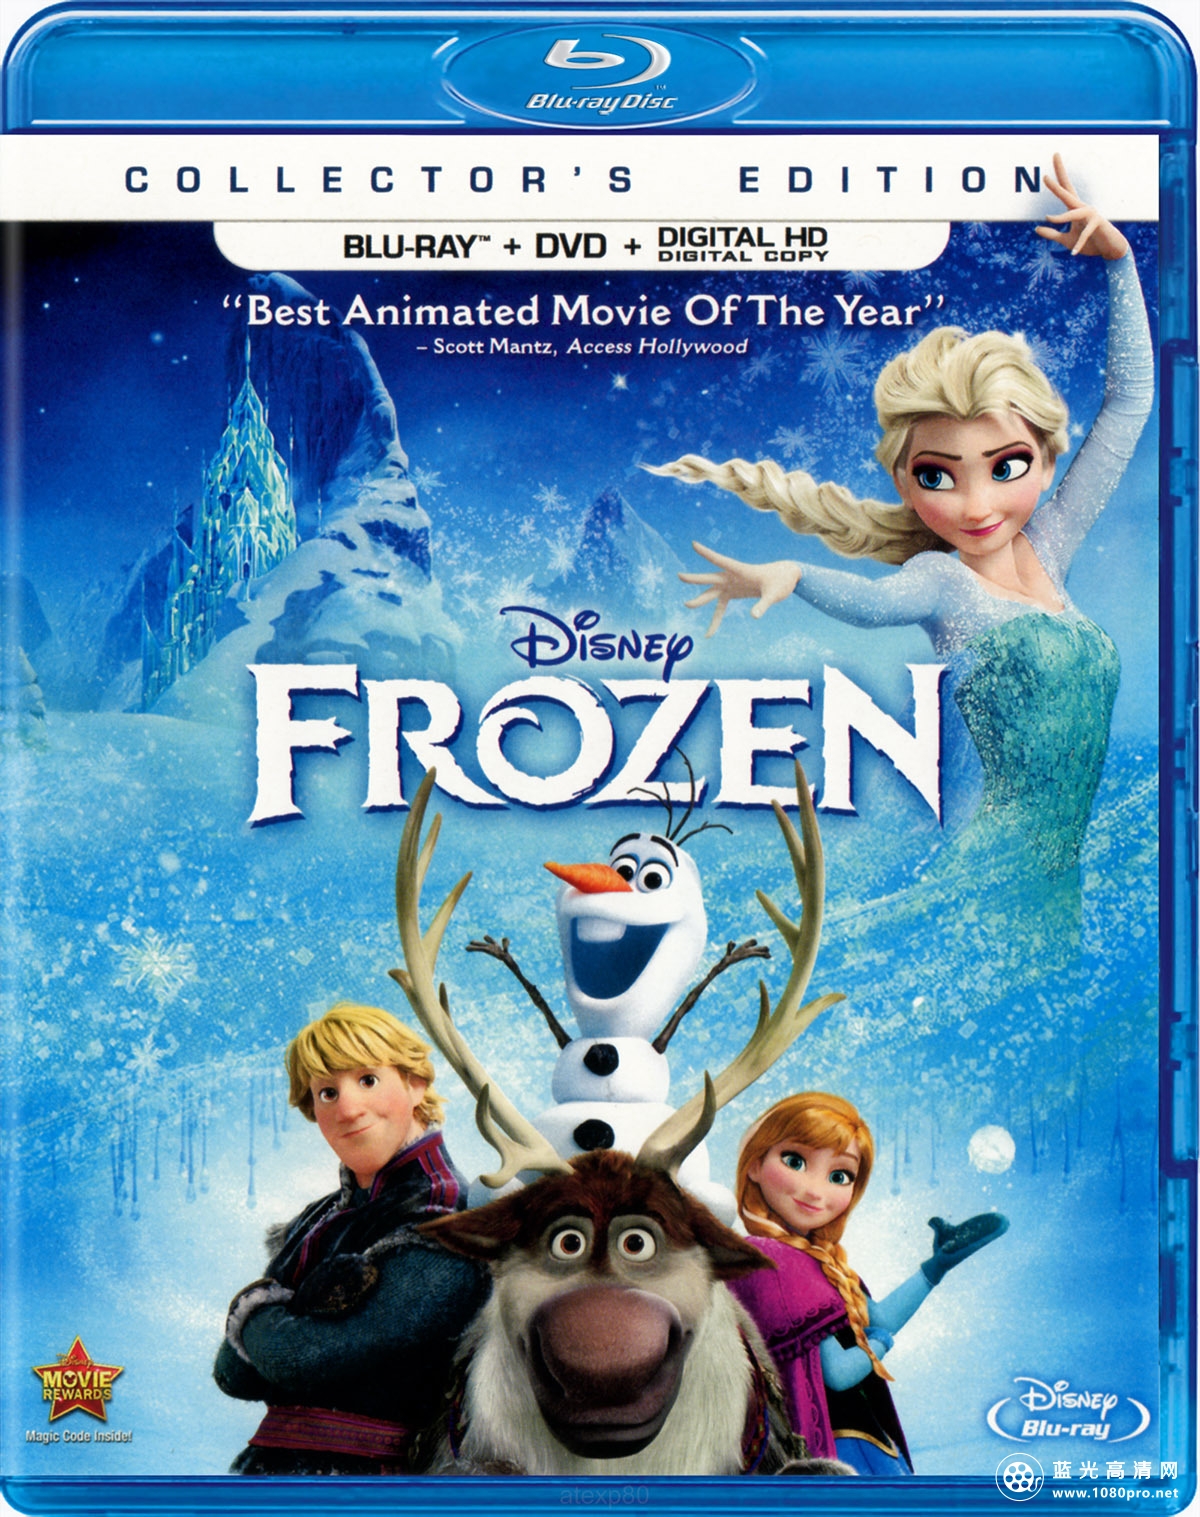 冰雪奇缘/冰雪大冒险 Frozen.2013.1080p.BluRay.REMUX.DTS-HD.MA.7.1-PublicHD 22.42GB-1.jpg